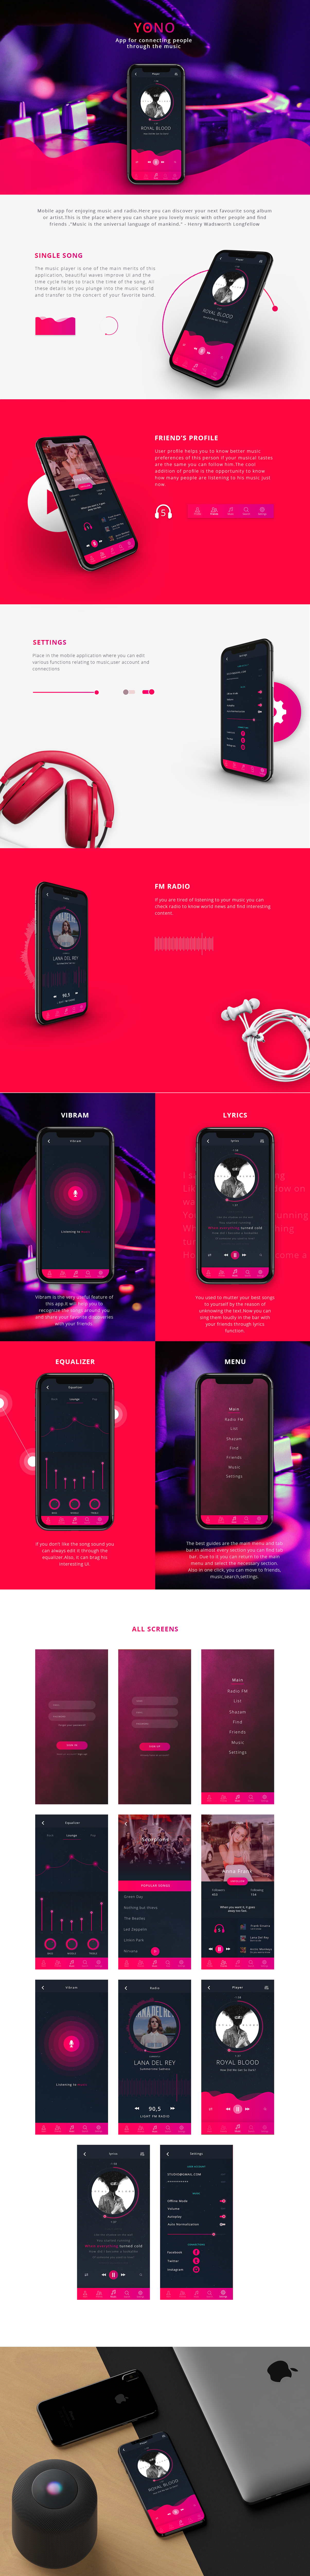 UI ux mobile app design music Web application mp3 template